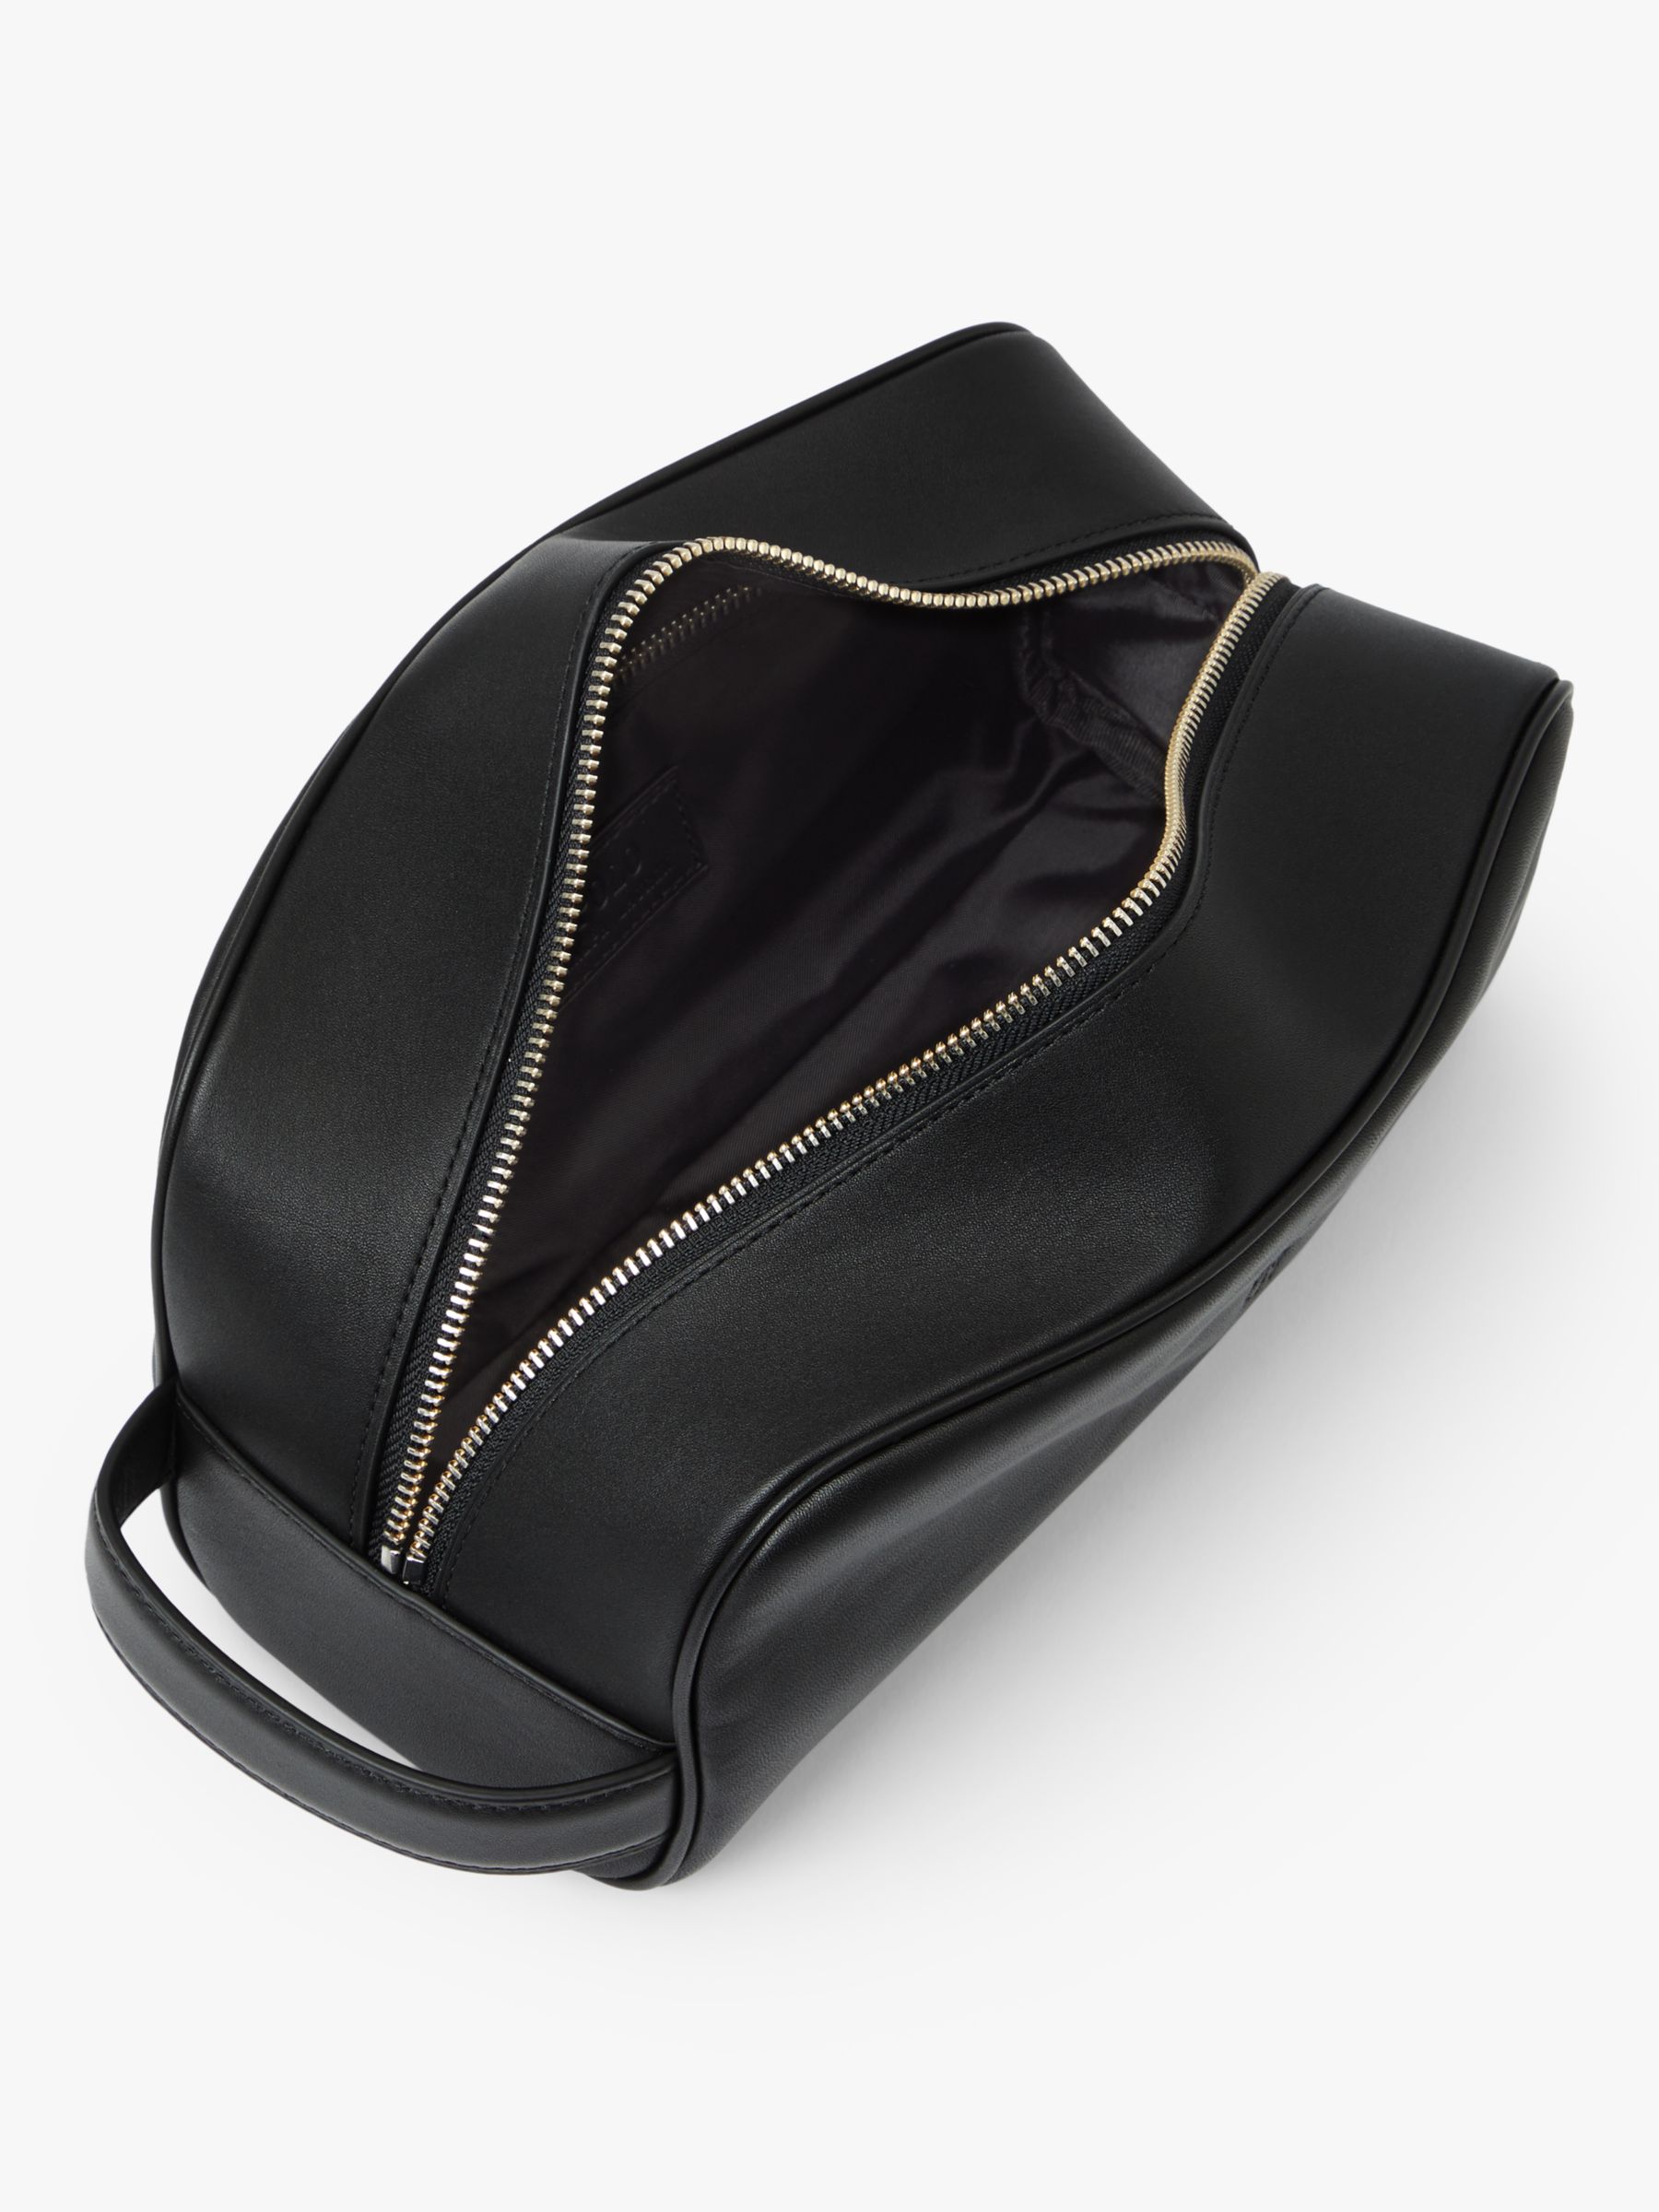 Polo Ralph Lauren Leather Wash Bag, Black